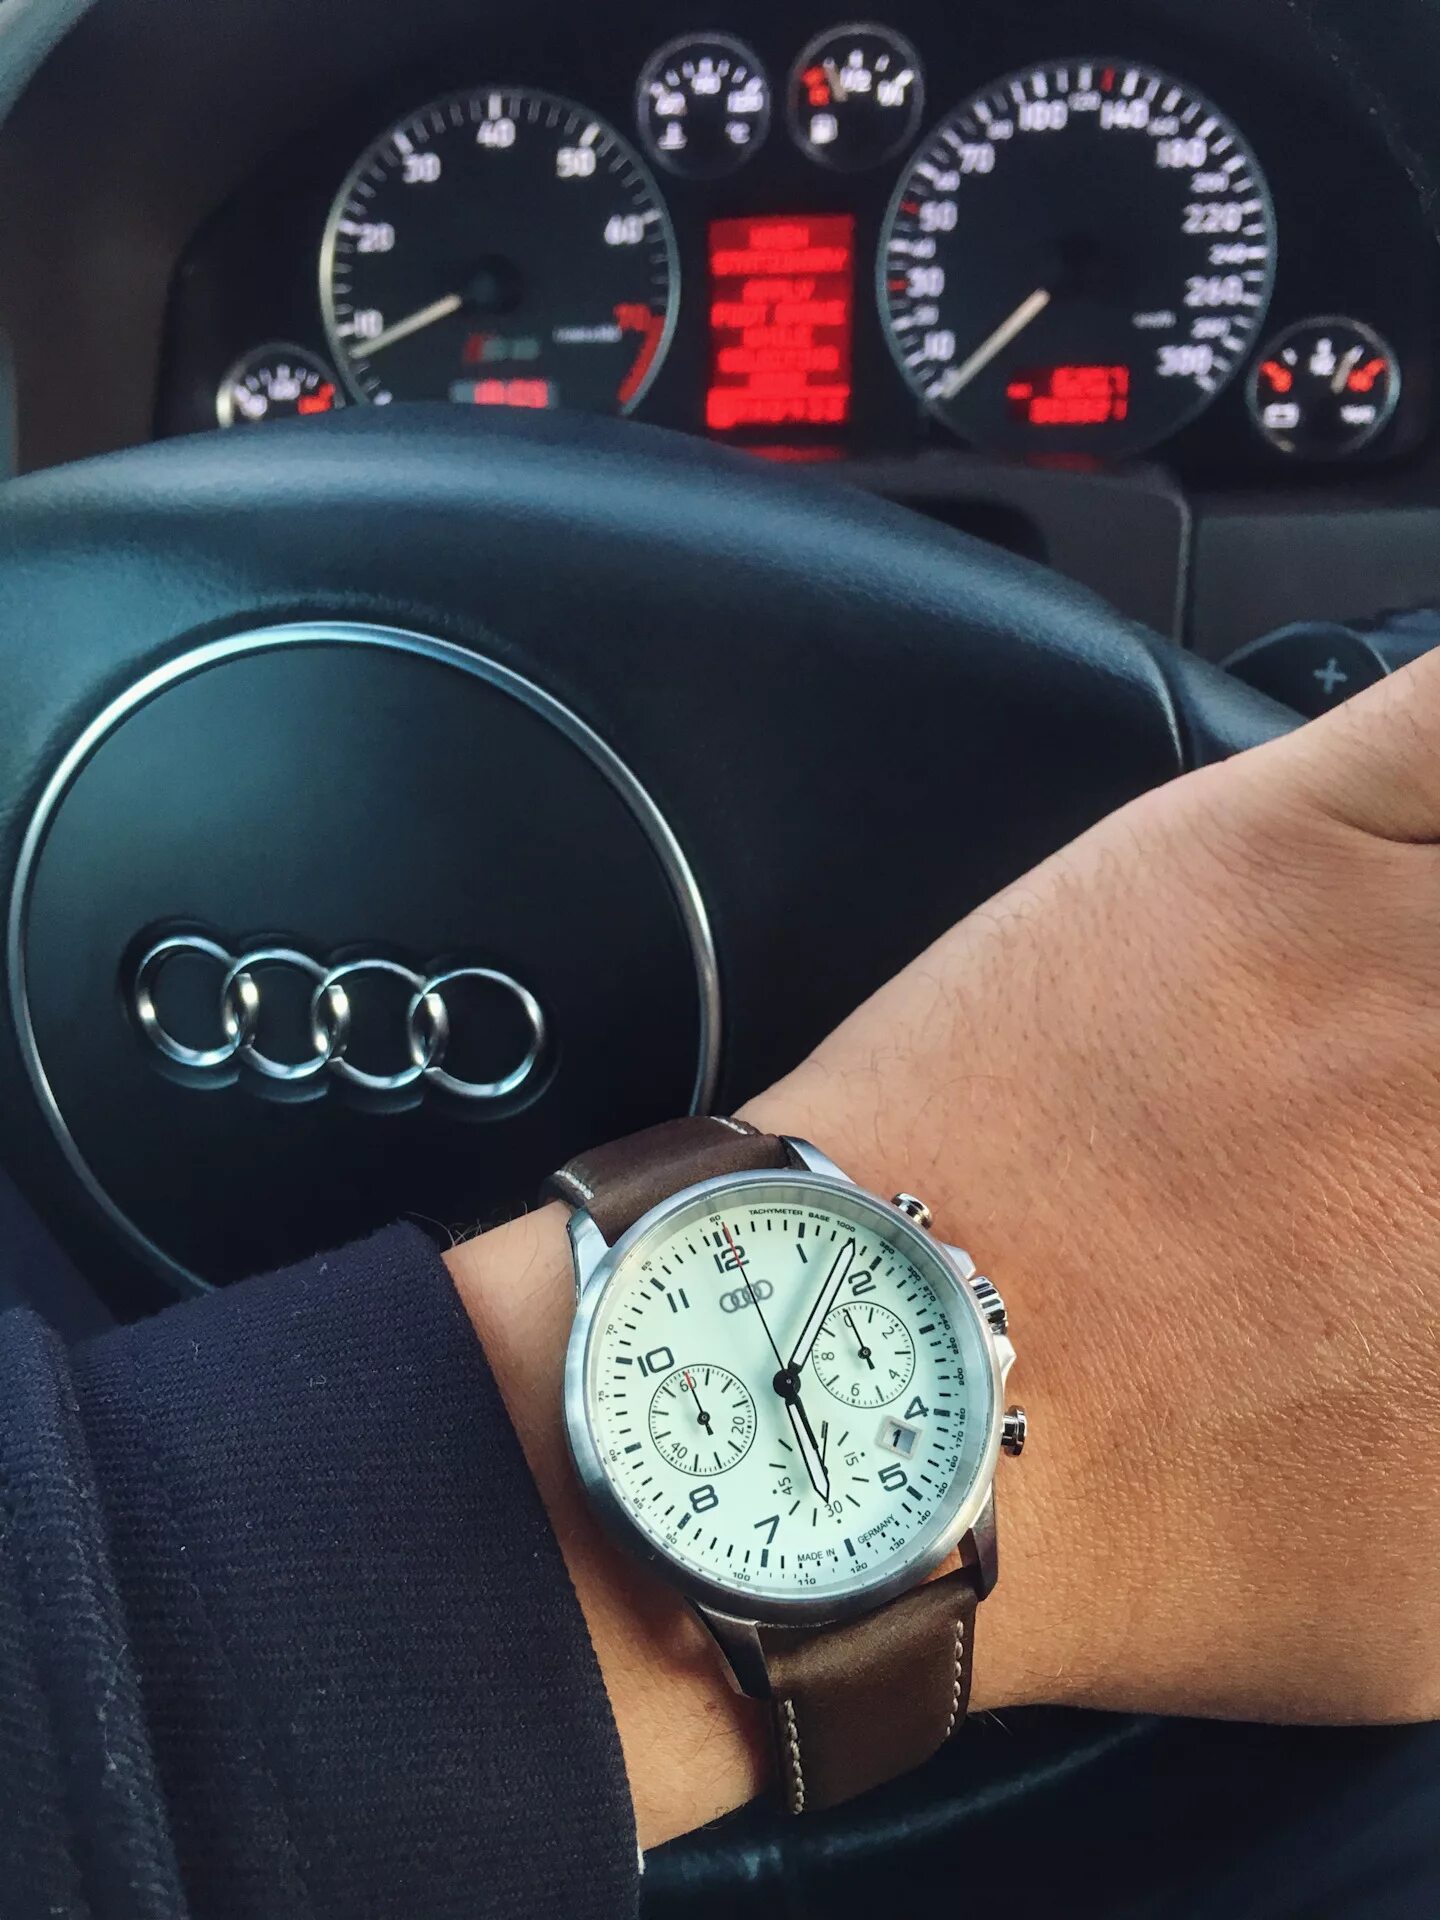 Часы Audi point Tec. Часы от Audi q5. Часы Ауди мужские оригинал. Часы Ауди женские. 30 часов на машине